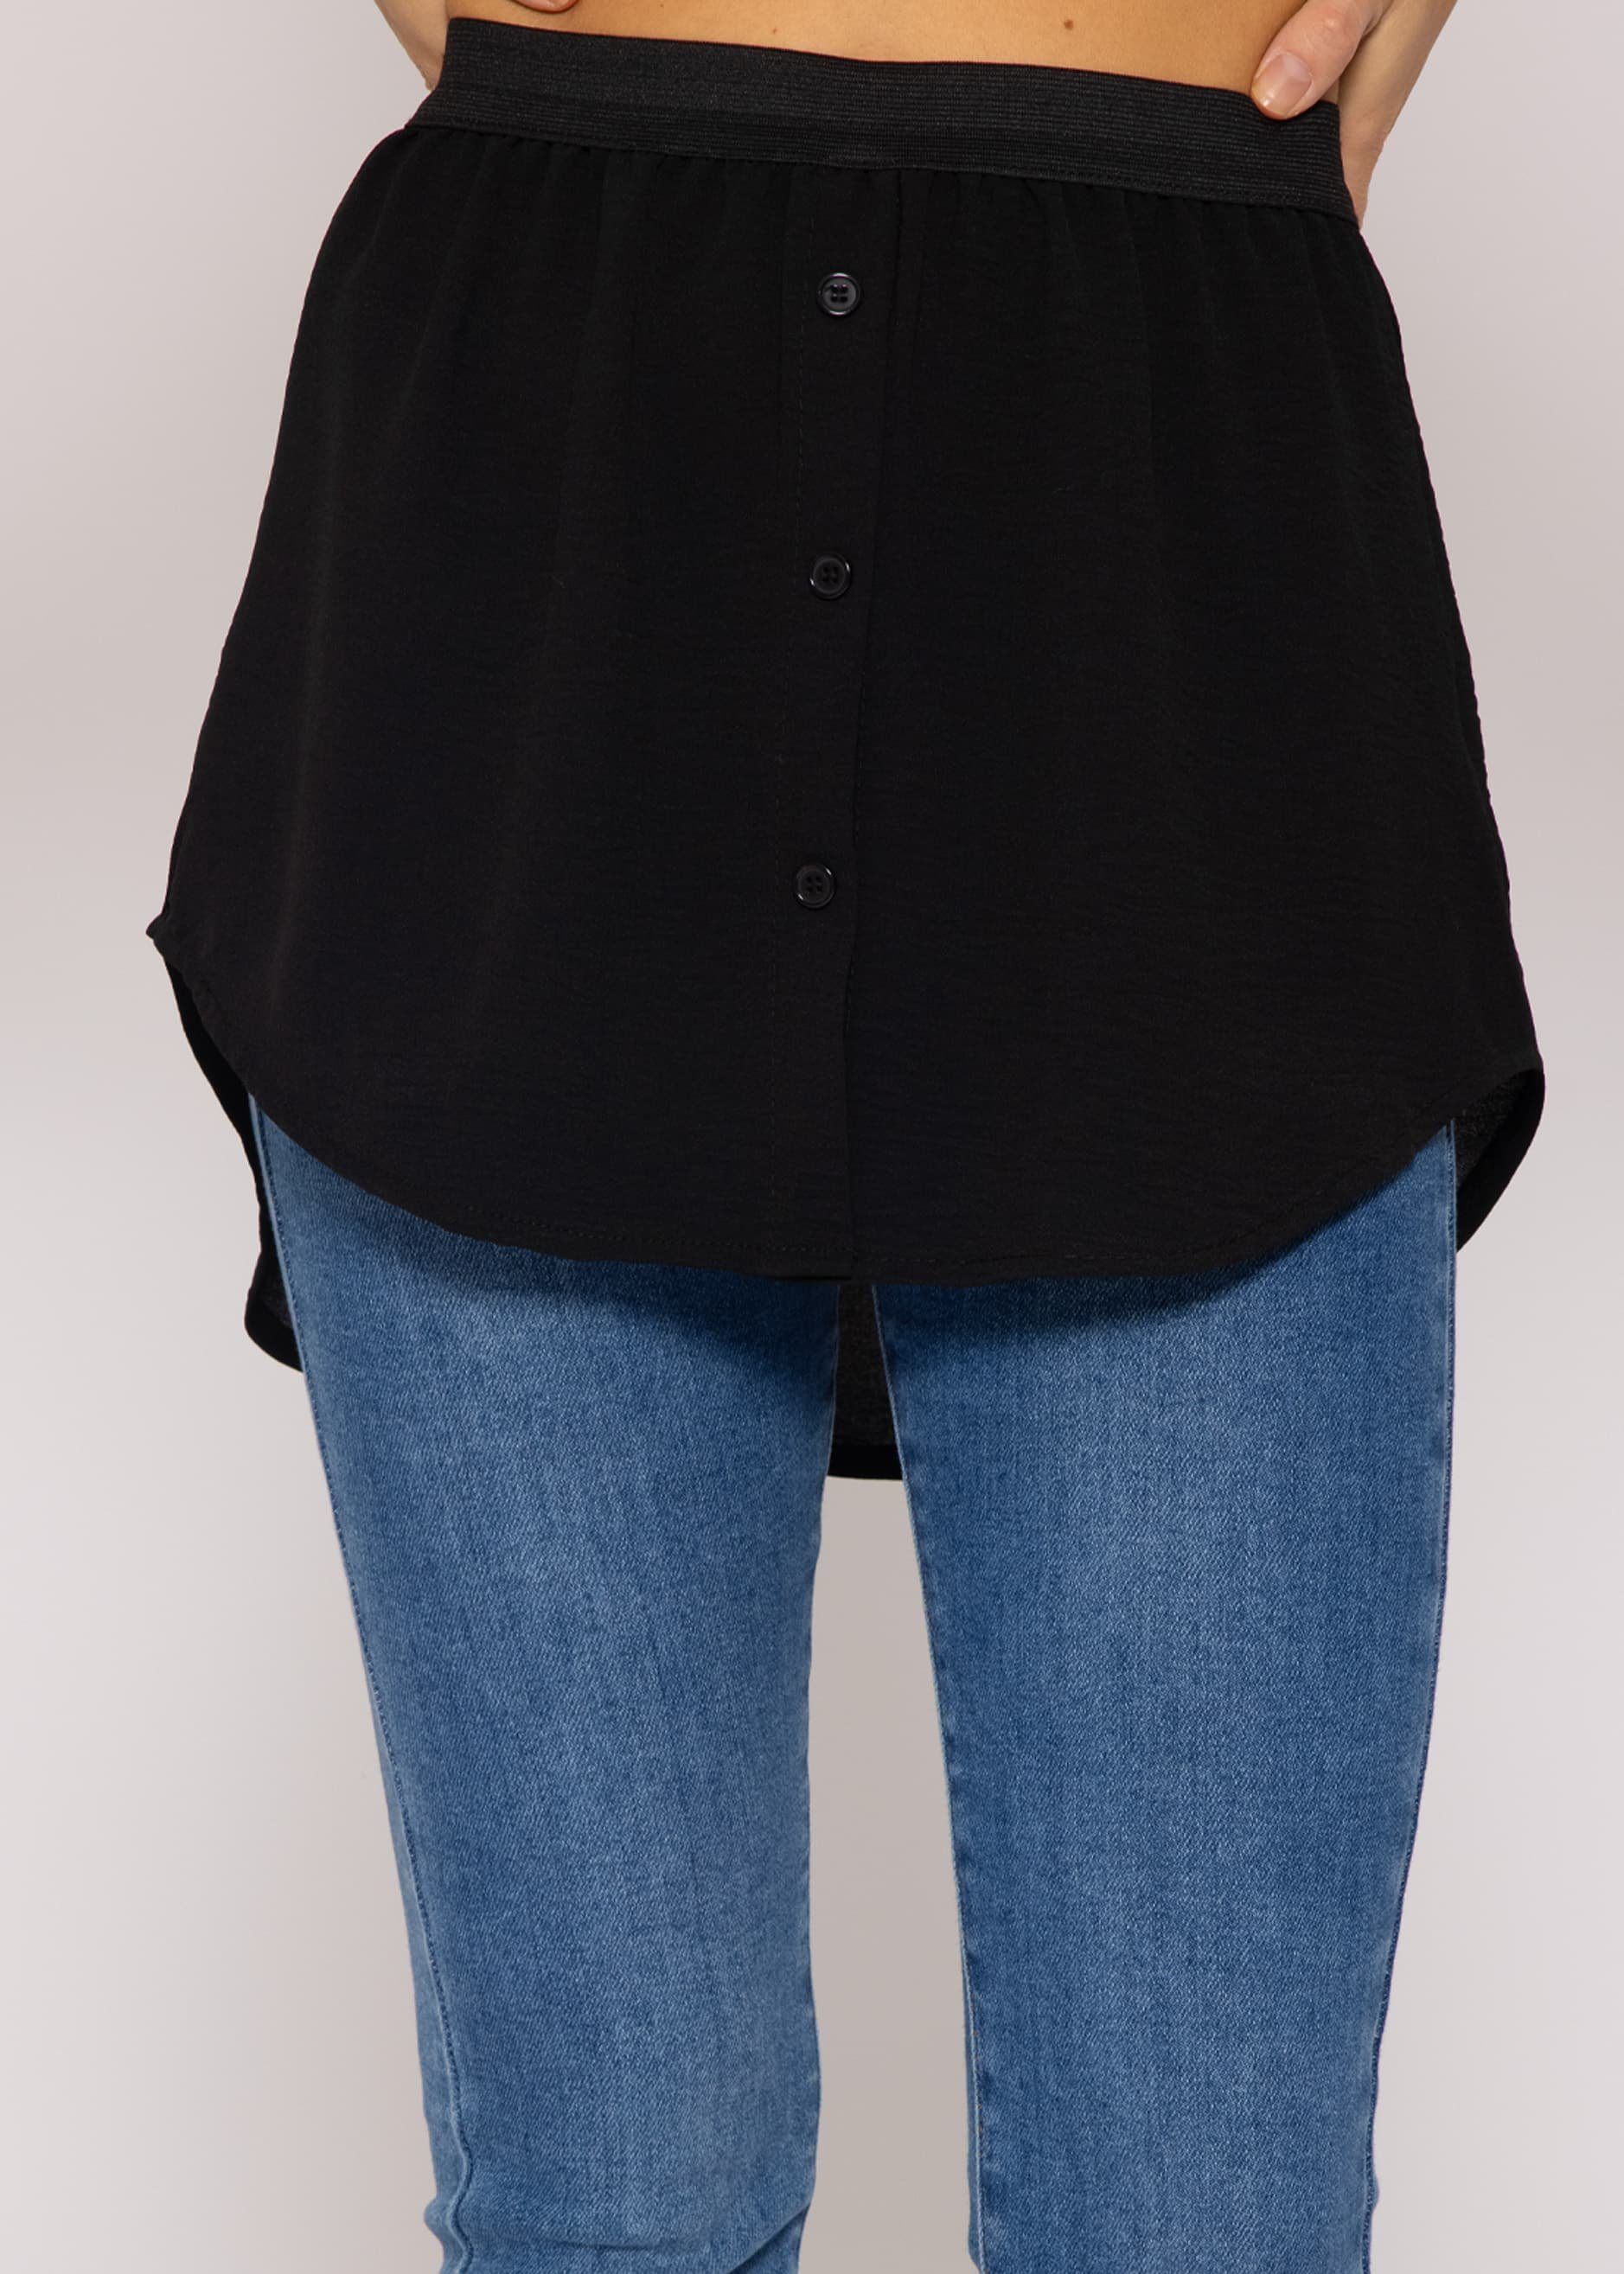 SASSYCLASSY Unterrock Mini Unterrock Damen in Unifarben Blusenrock mit Gummibund Unterrock mit Ton-in-Ton-Nähten Made in Italy Schwarz